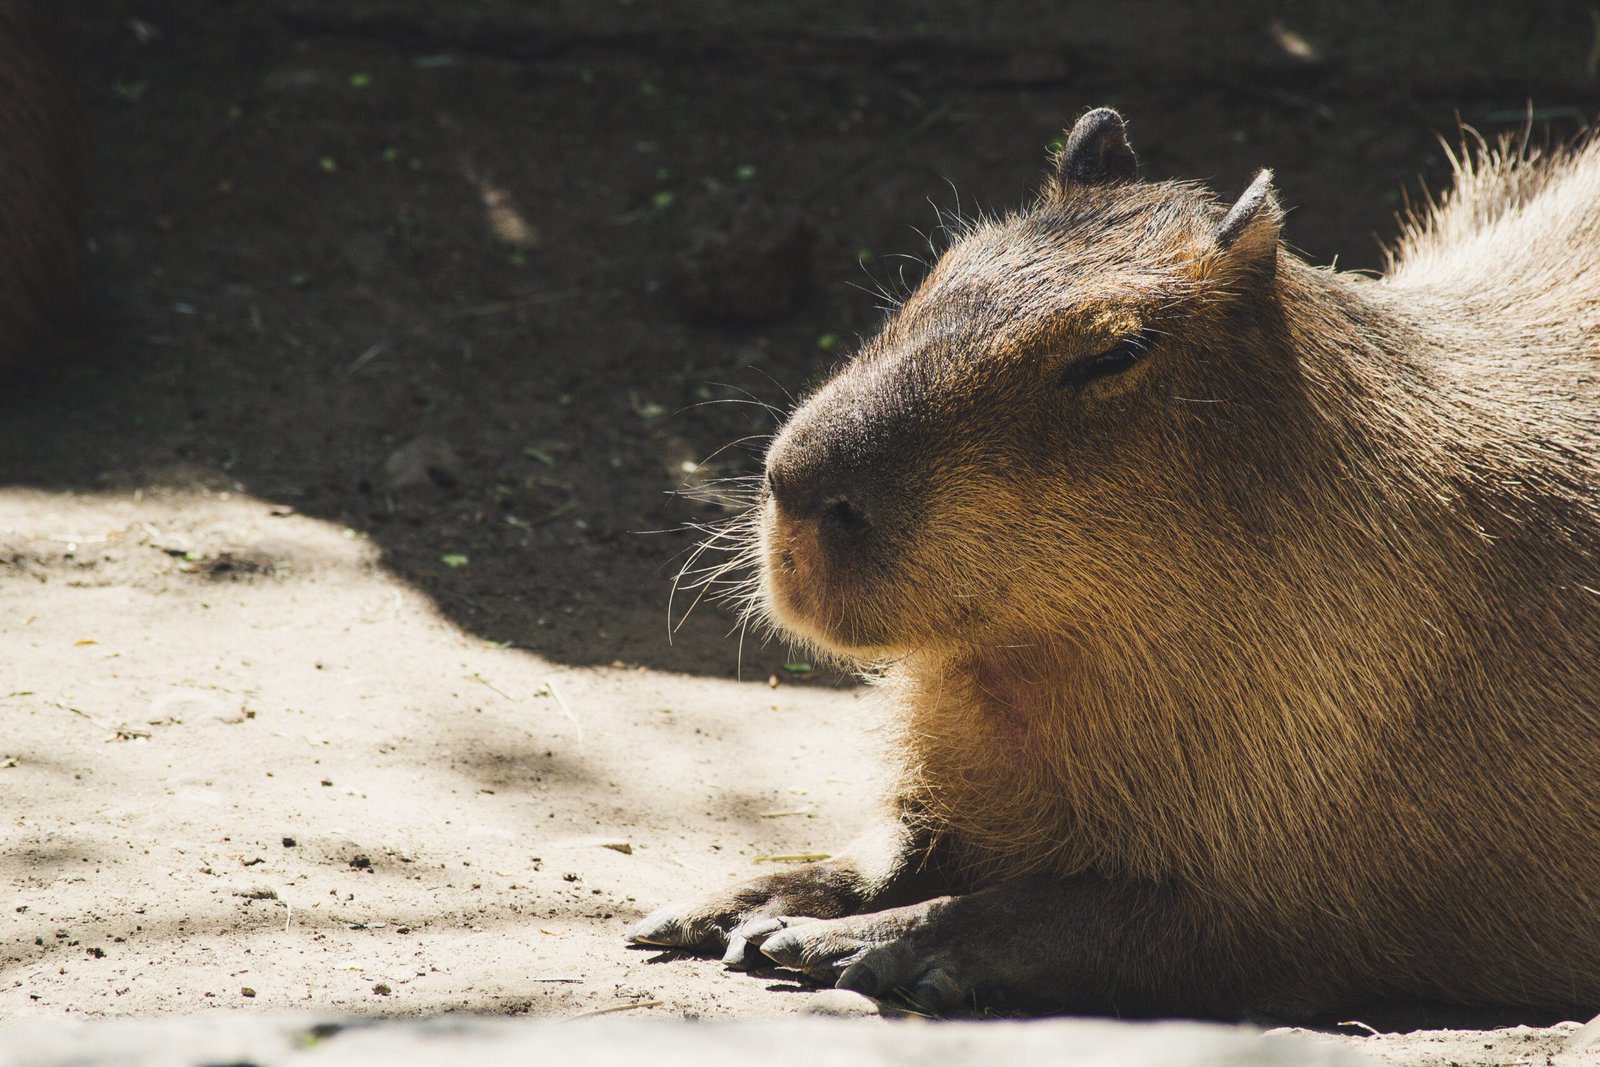 The Capybaras Adventure at Chessington World of Adventures